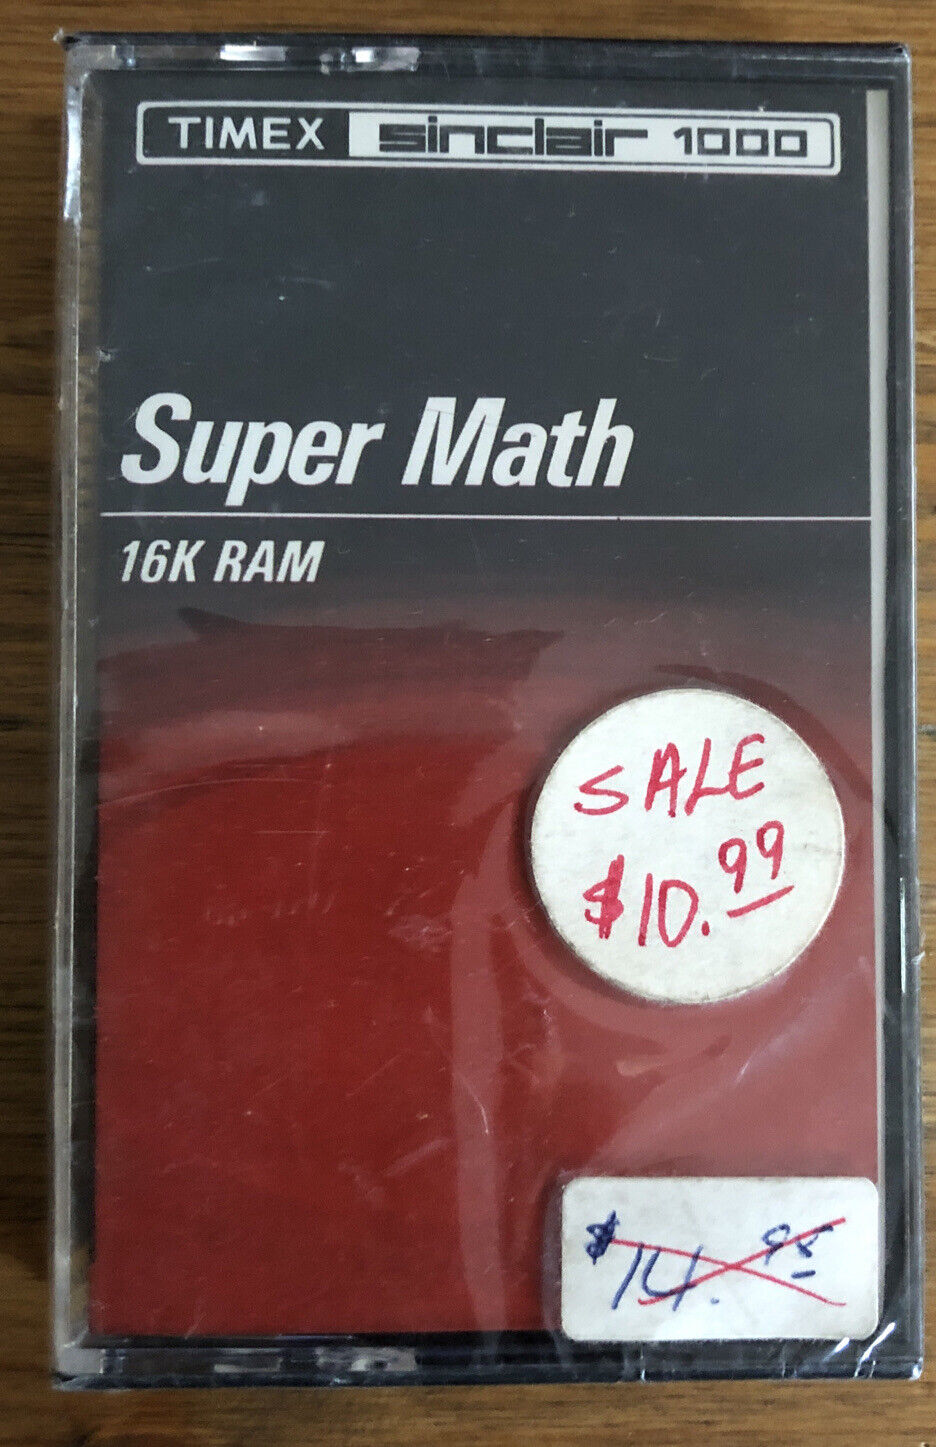 Super Math TIMEX SINCLAIR 1000 16K RAM Tape Software New Sealed